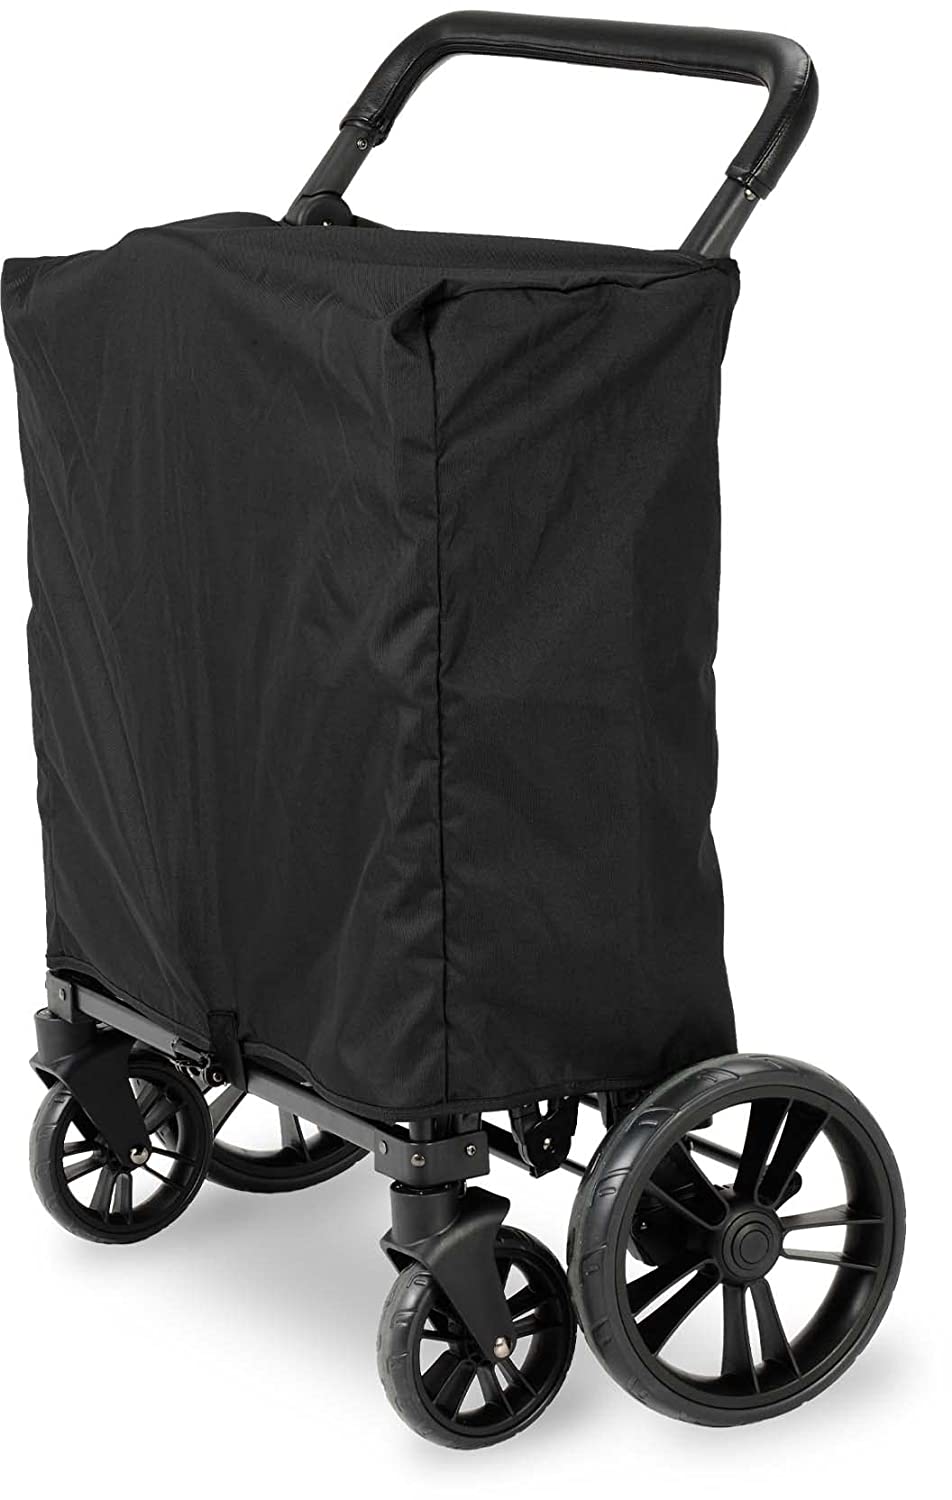 WonderFold Baby X4 Passenger Stroller Wagon